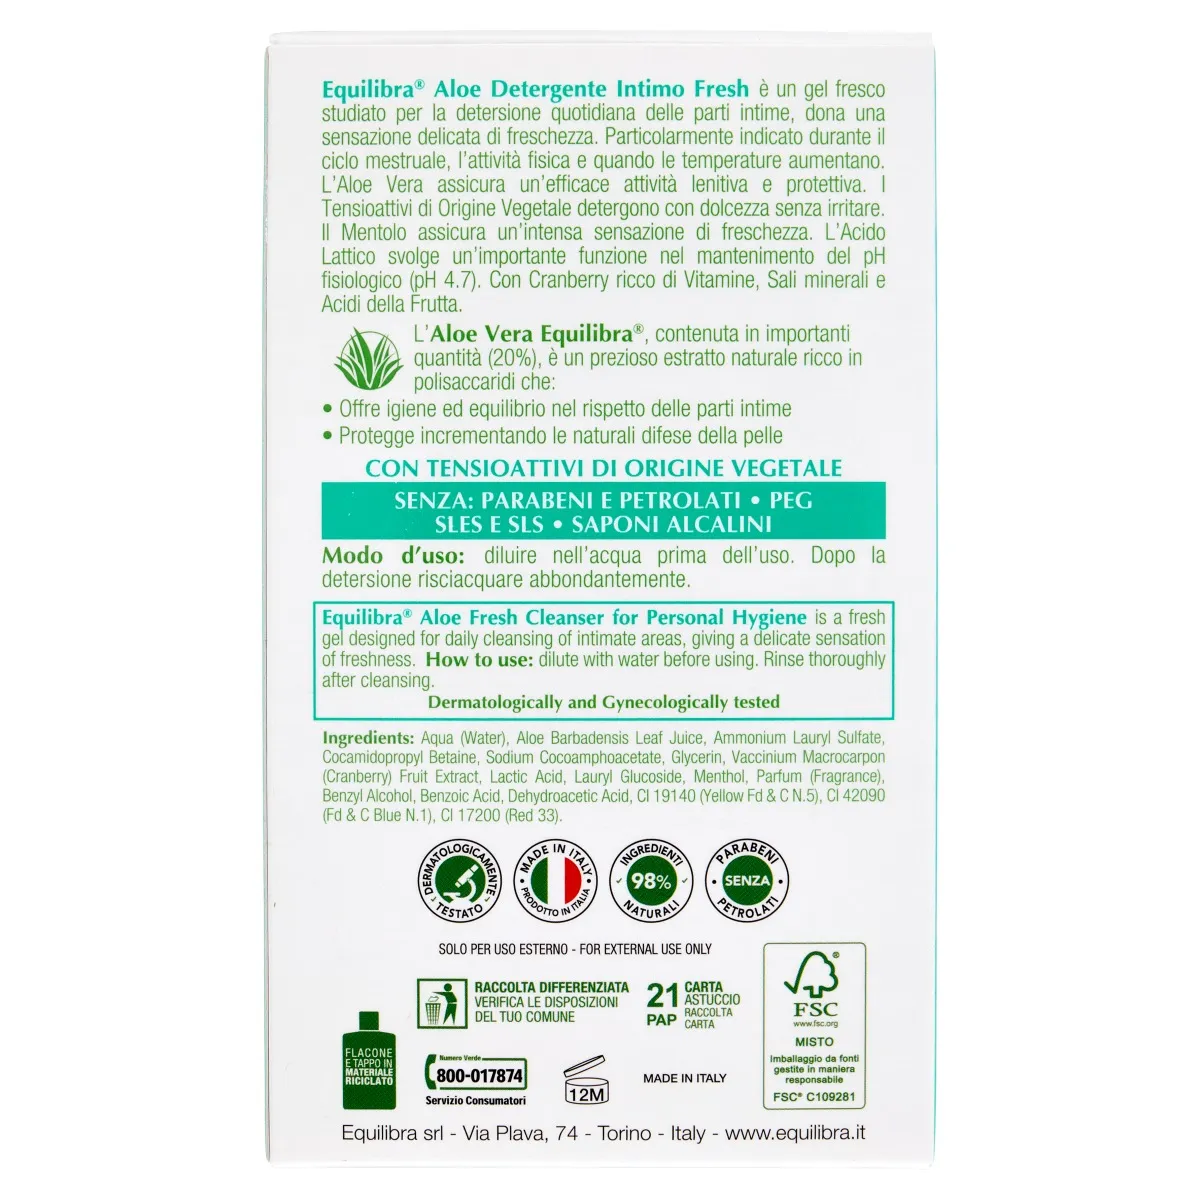 Equilibra Aloe Detergente Intimo Fresh 200 Ml Contrasta Impurità